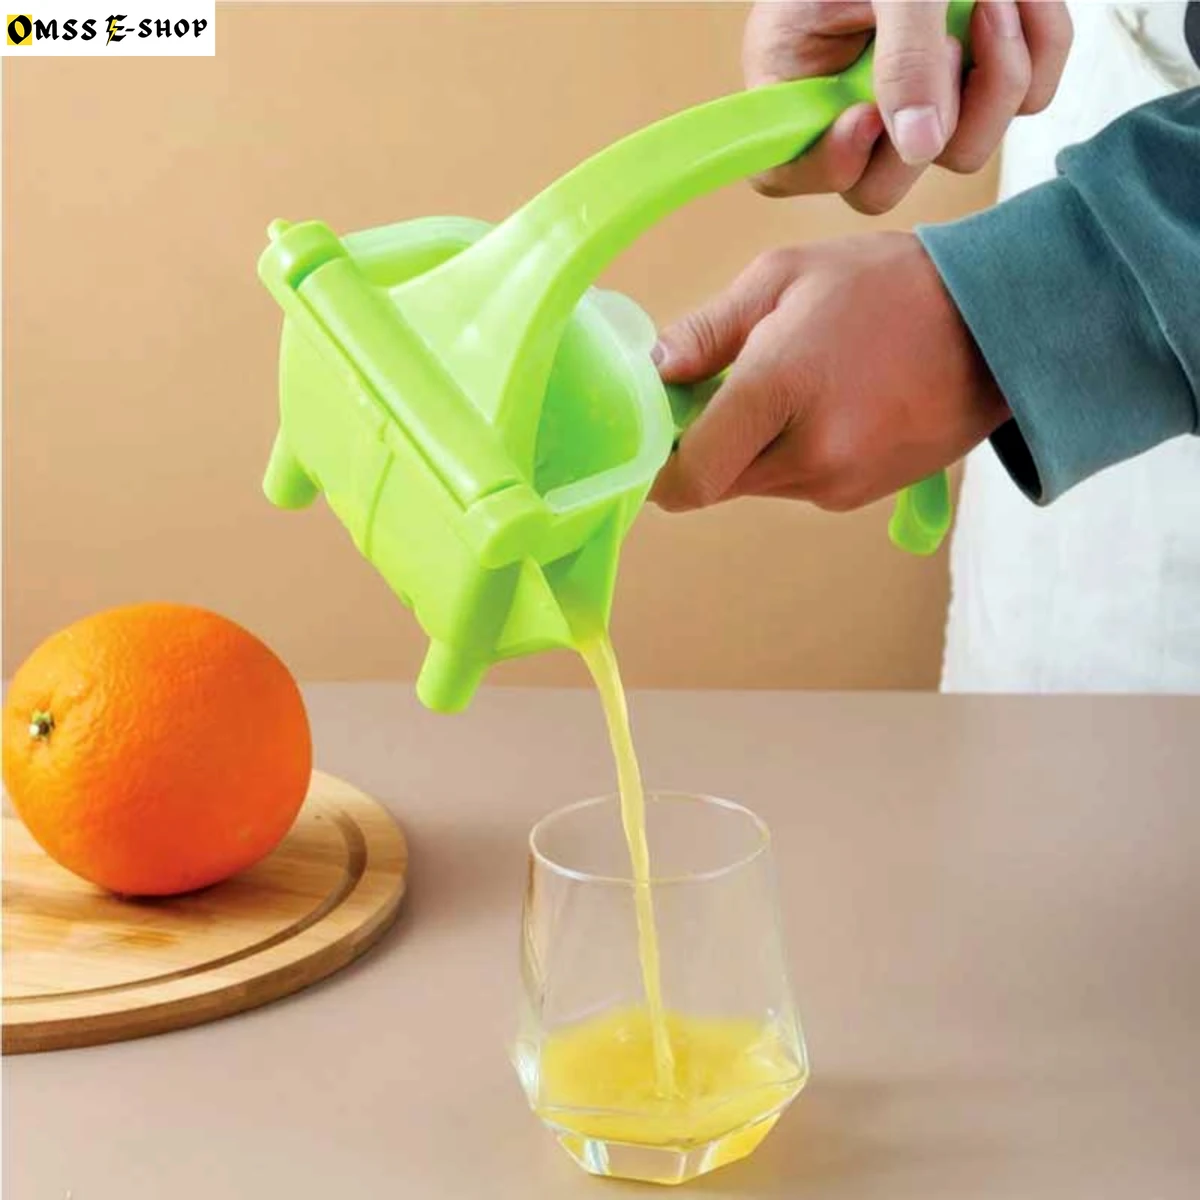 Manual Juicer Hand Pressure Fruit Squeezer Watermelon Orange Lemon Squeezer Fresh Juice Maker Kitchen Gadget Fruit Tool